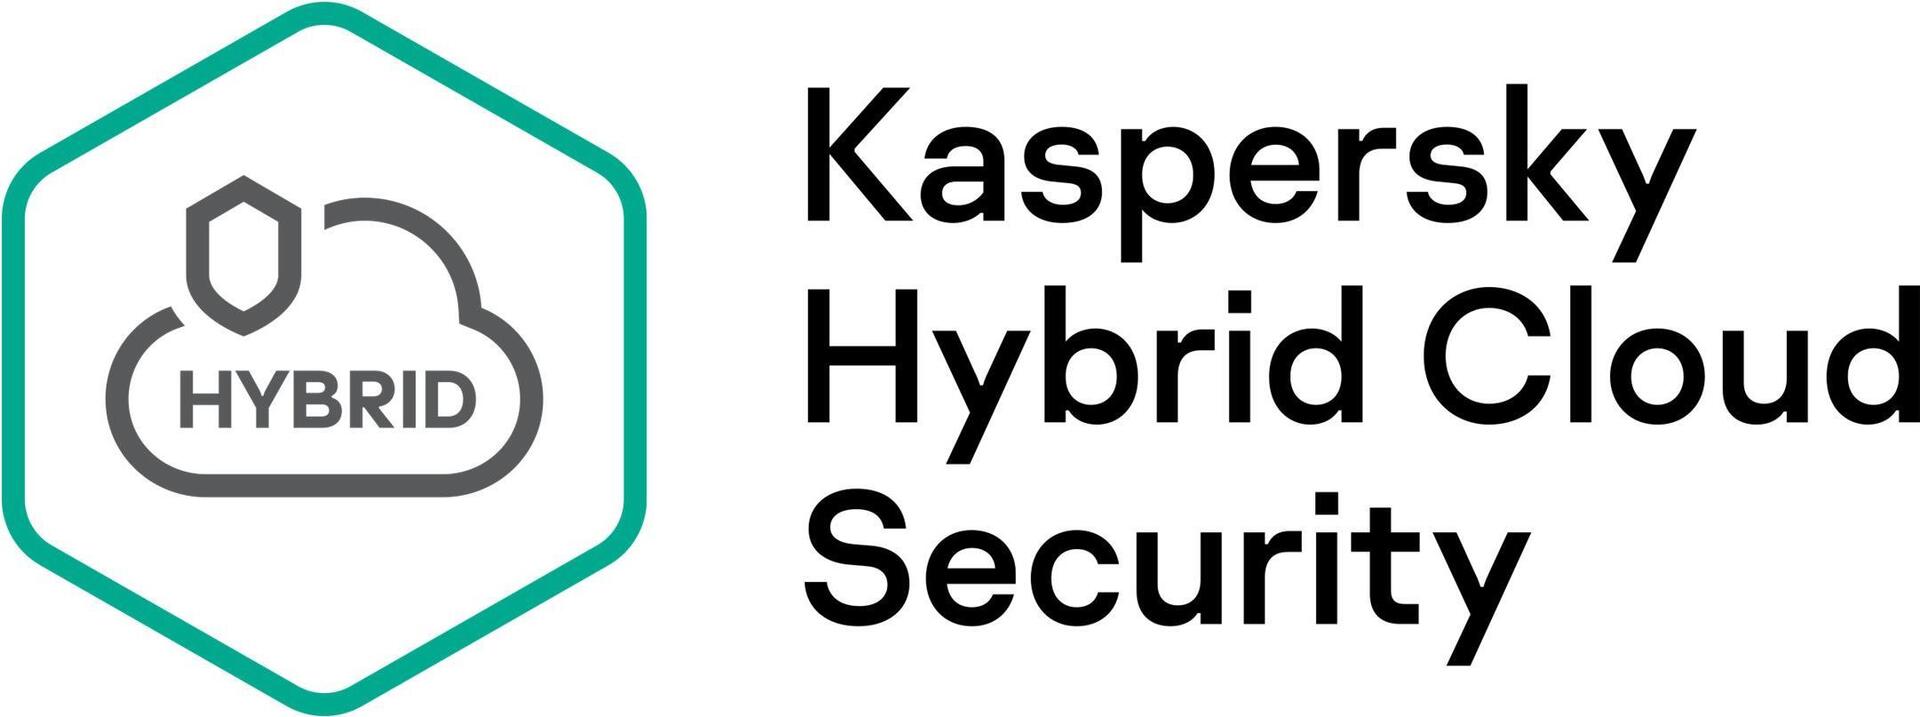 Kaspersky Hybrid Cloud Security Desktop (KL4155XAPD9)